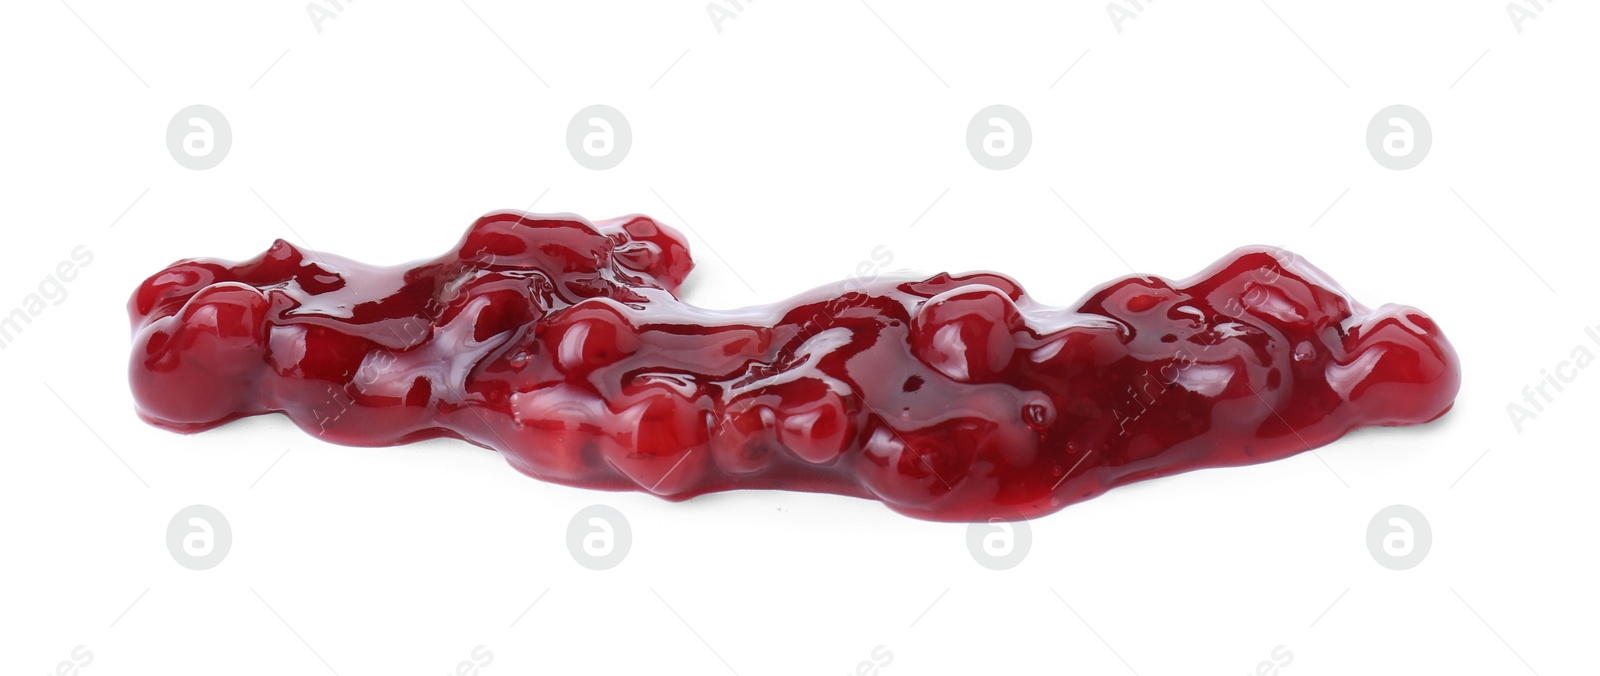 Photo of Tasty fresh cranberry sauce isolated on white